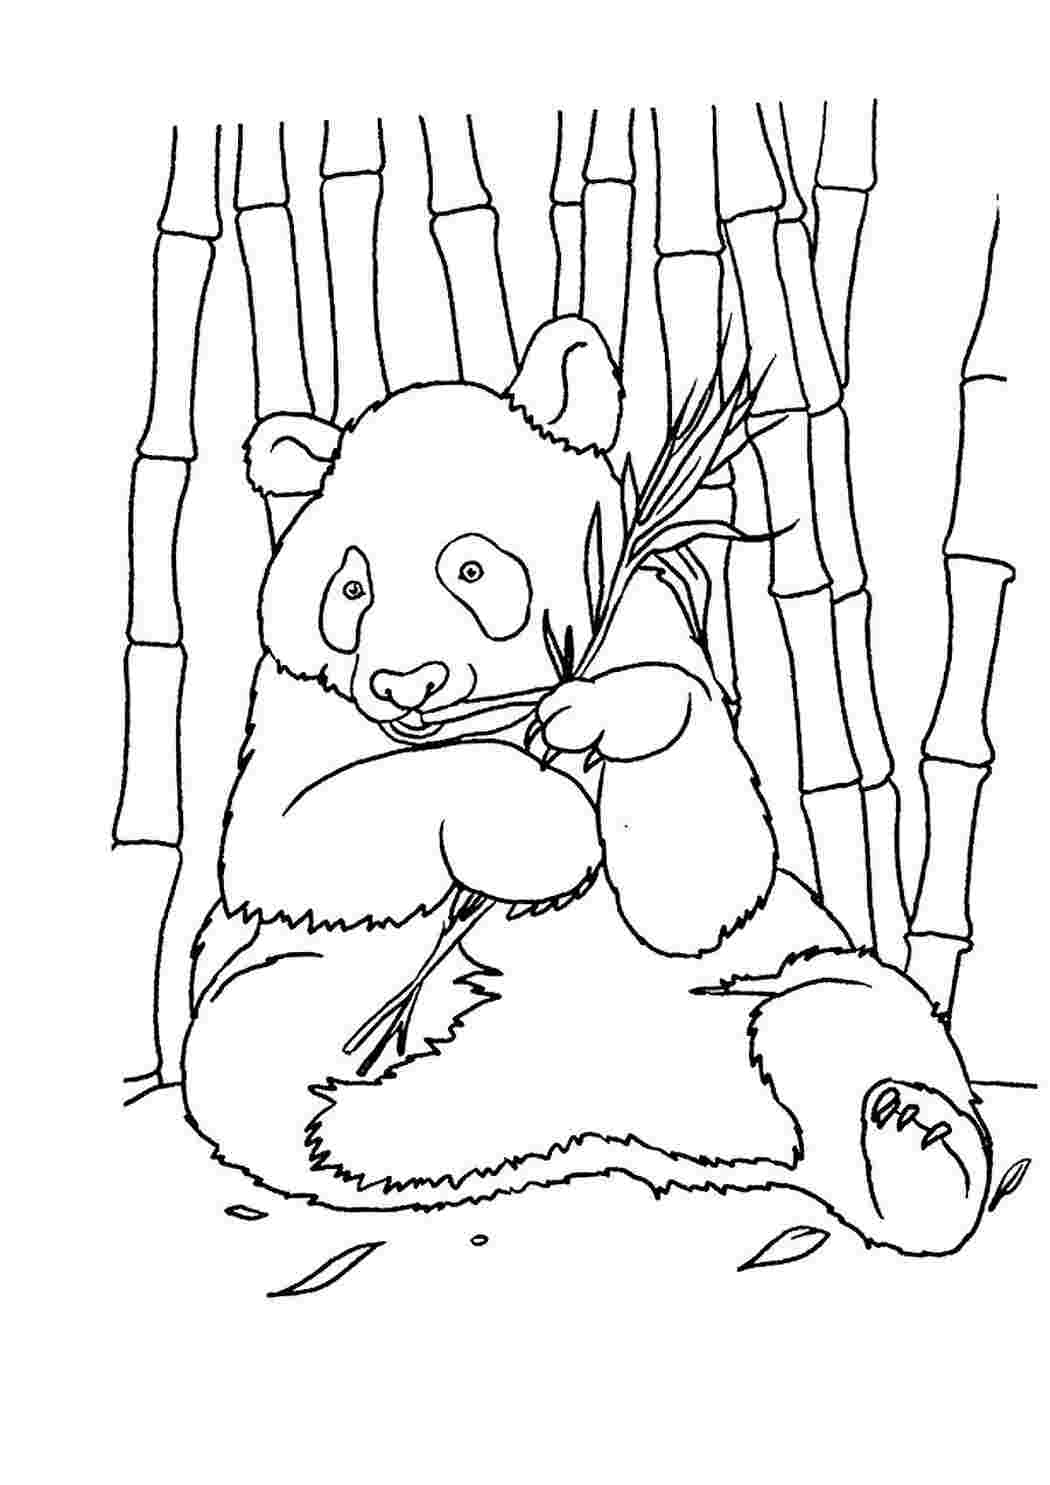 Раскраски с пандами и котятами (46 фото) » Картинки, раскраски и трафареты для всех - rov-hyundai.ru